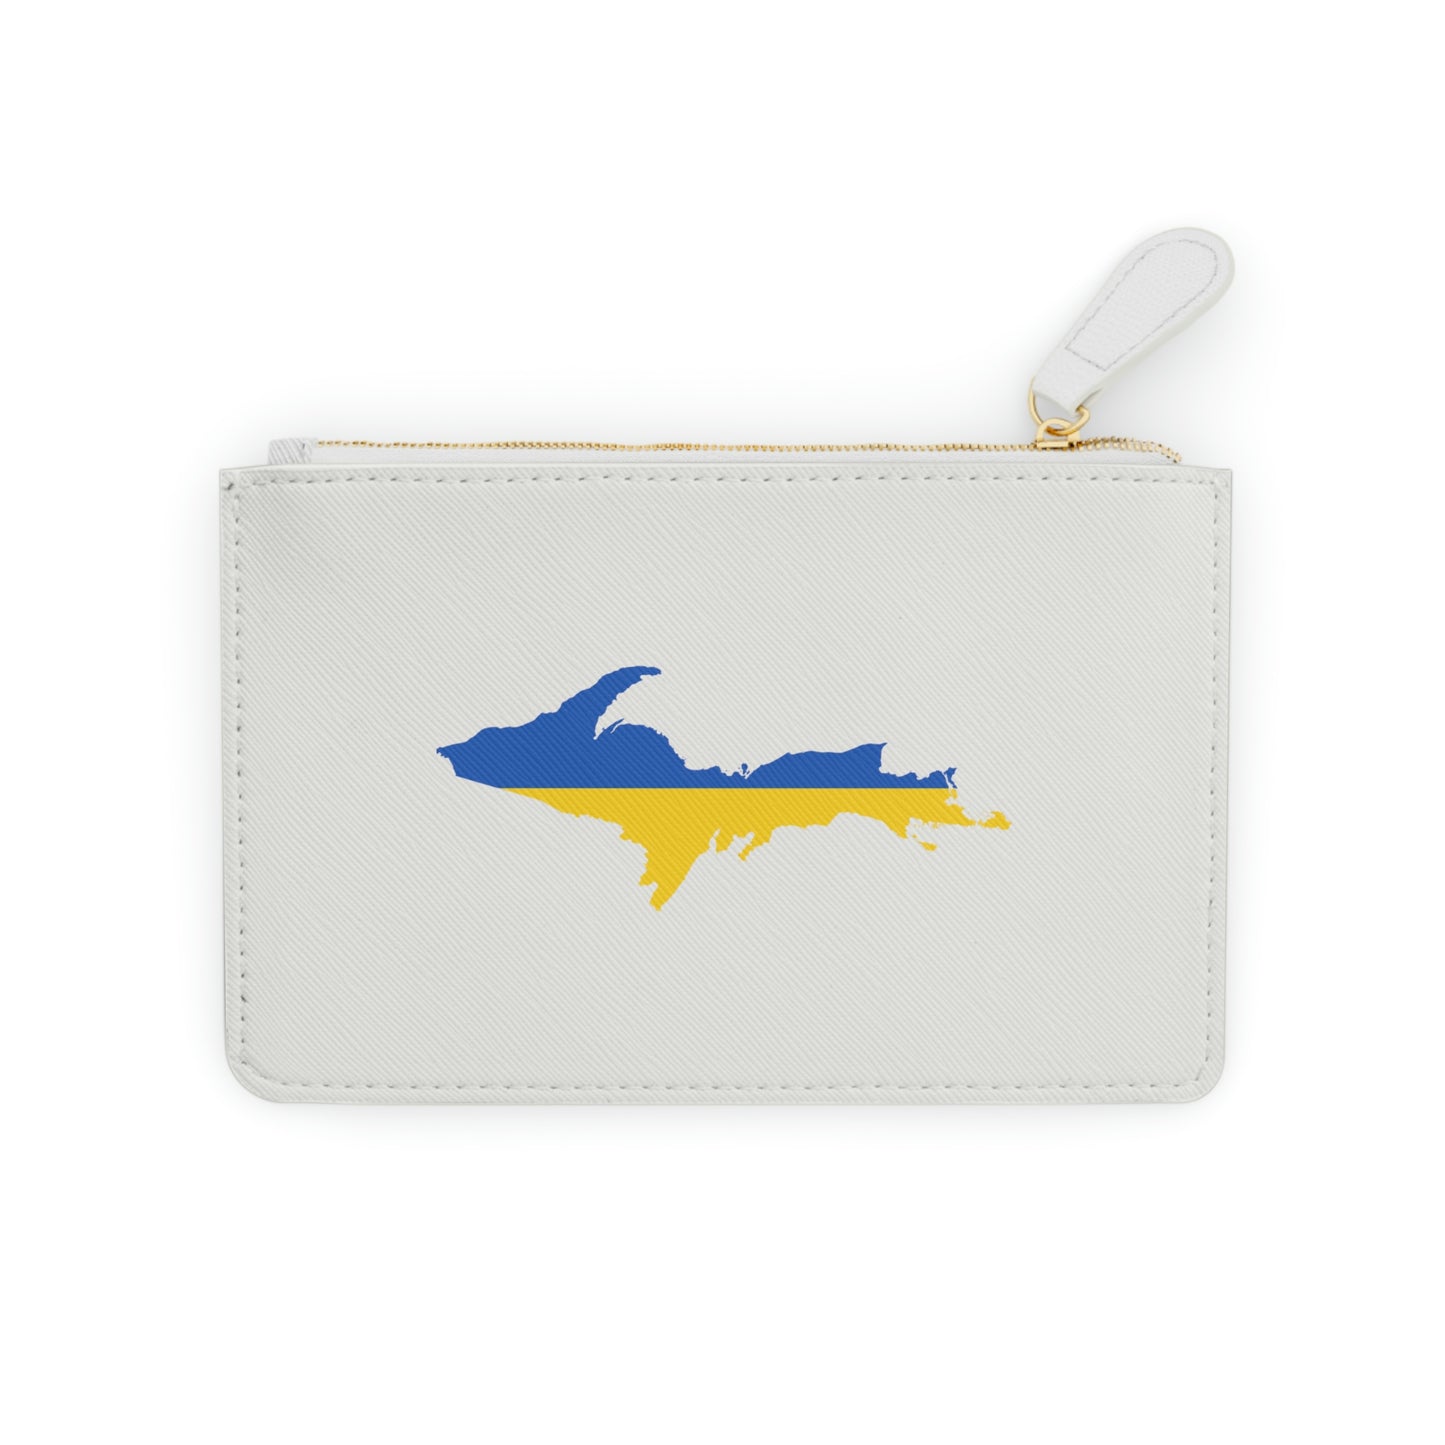 Michigan Upper Peninsula Mini Clutch Bag (Birch Bark White w/ UP Ukraine Flag Outline)